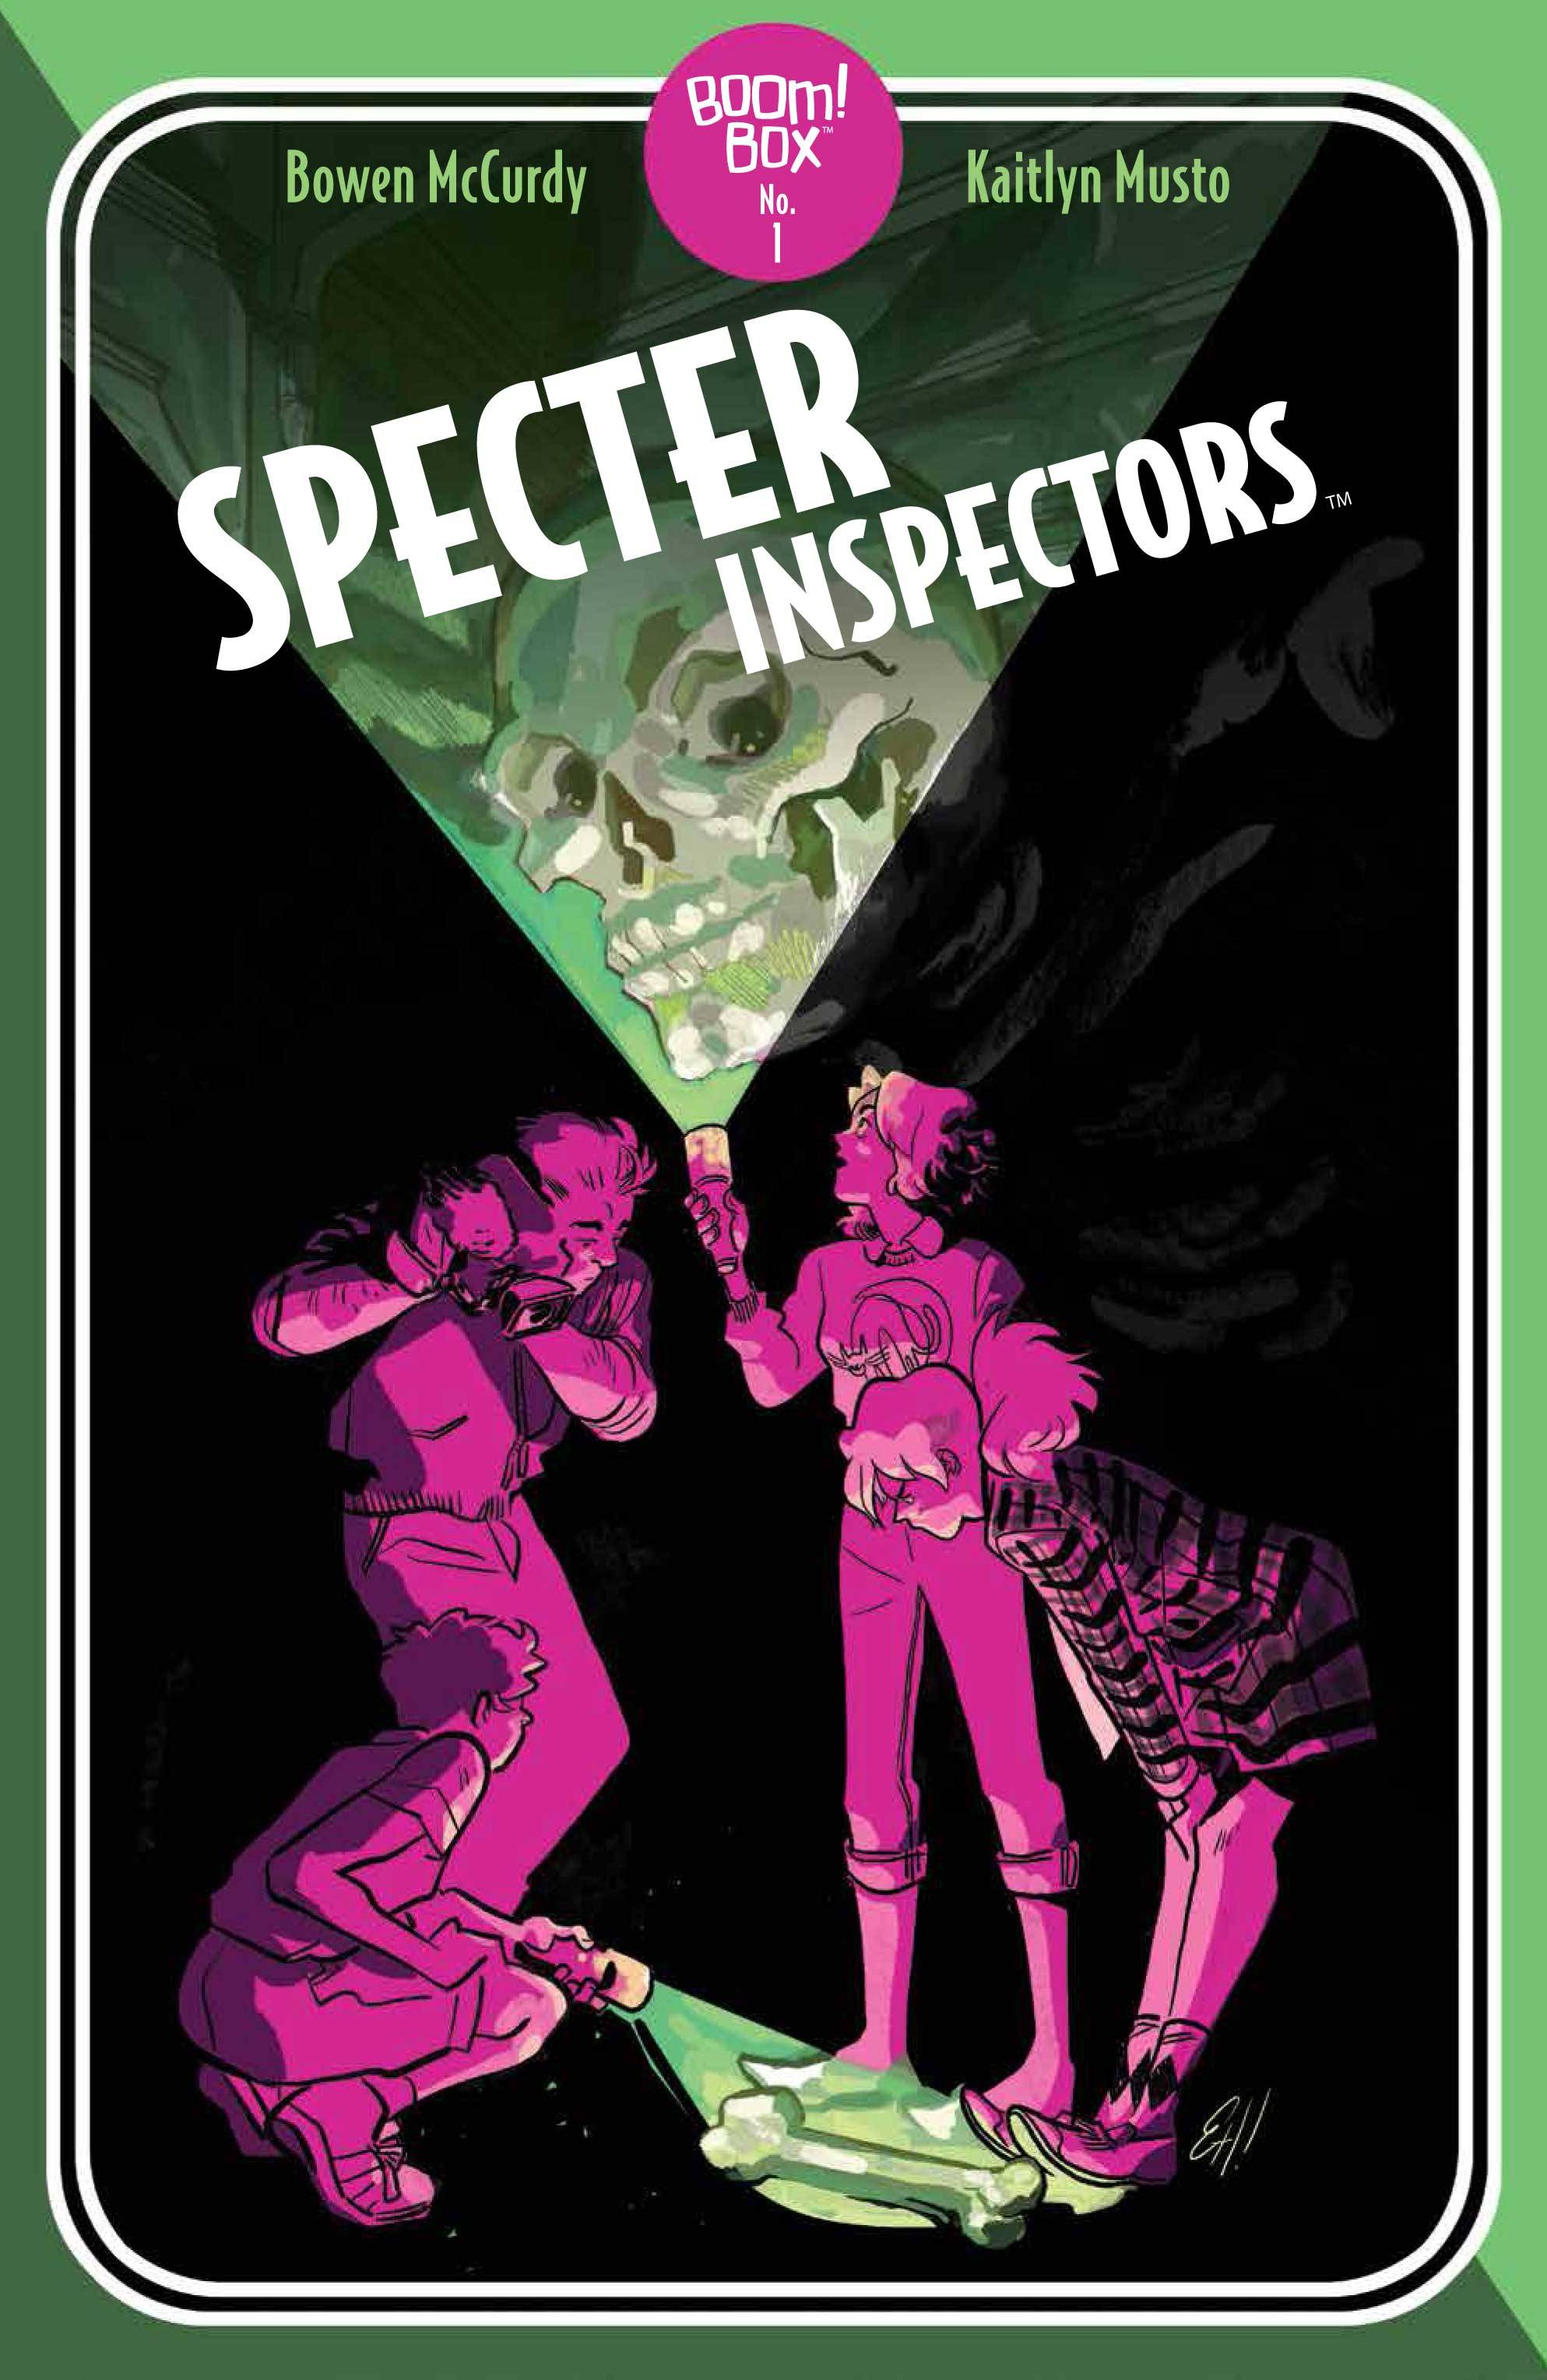 Specter Inspectors #1 by Bowen McCurdy